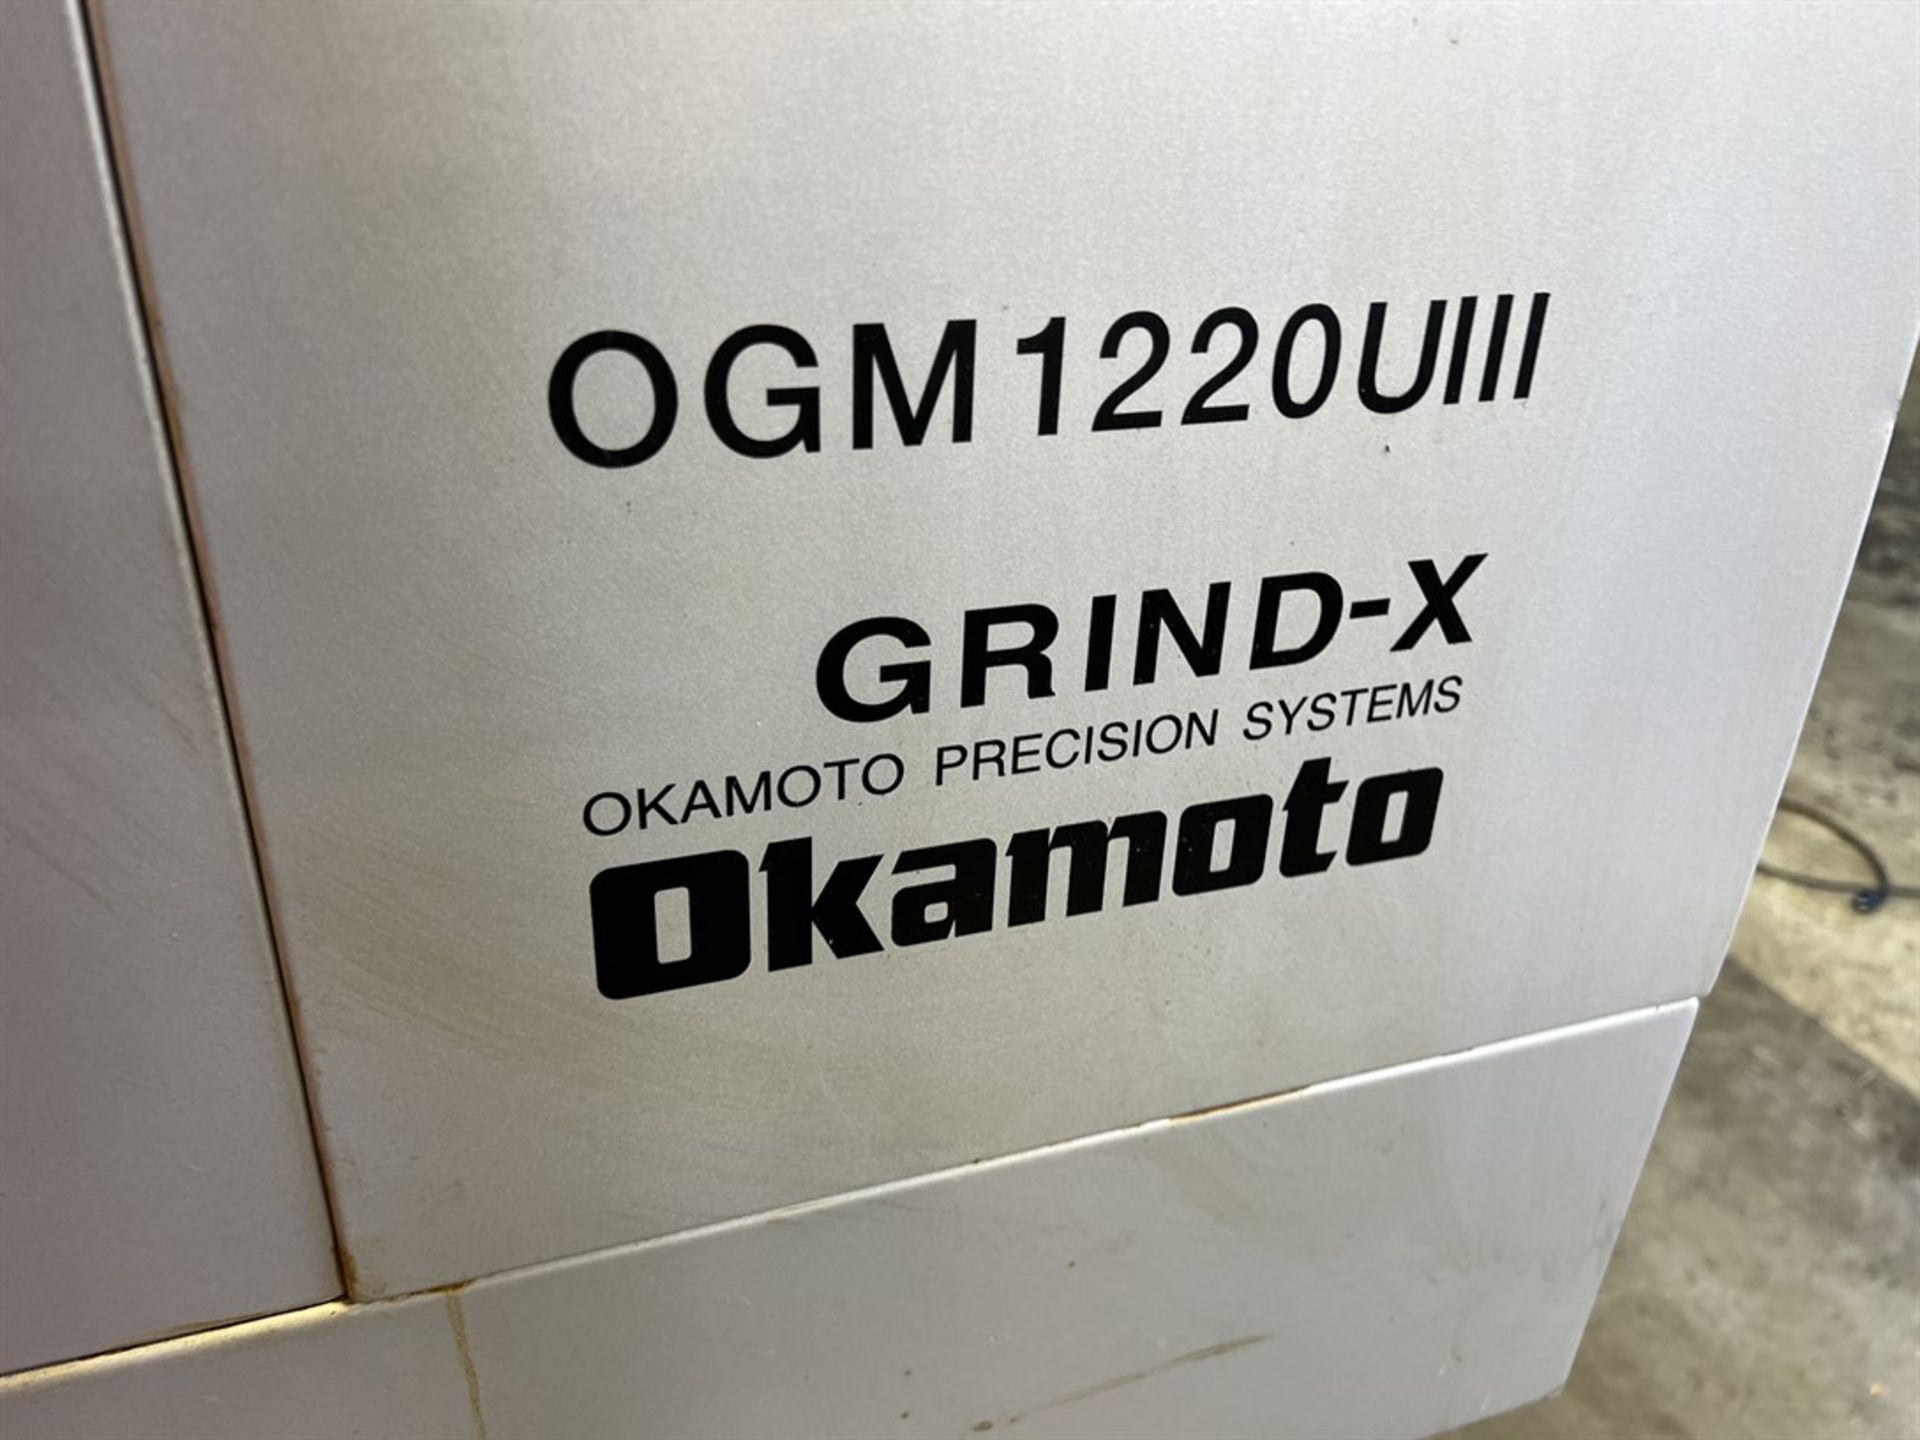 2016 OKAMOTO OGM 1220 UIII CNC Universal Grinder, s/n 36209, Okamoto Precision Control, 12" Swing, - Image 9 of 14